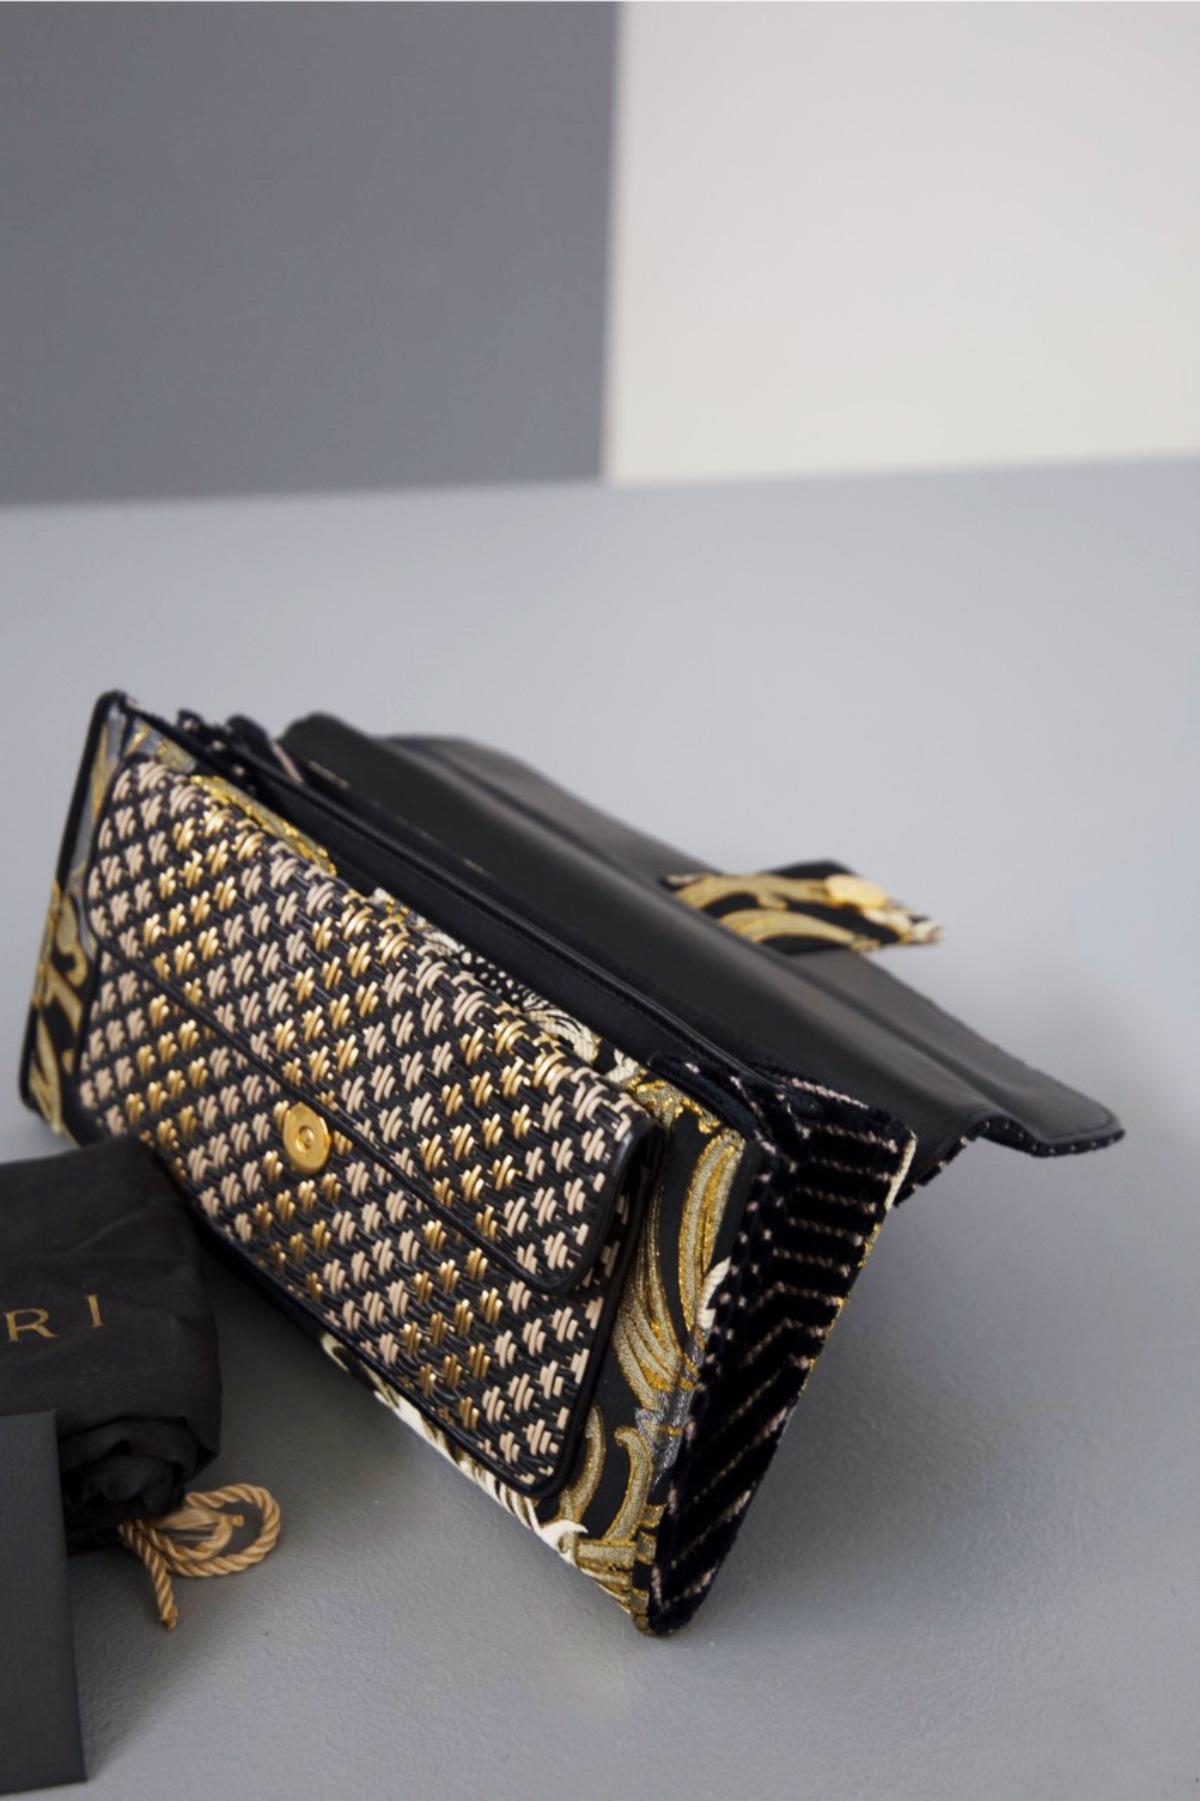 Bulgari Damen-Clutch Bag mit goldenen floralen Details 10